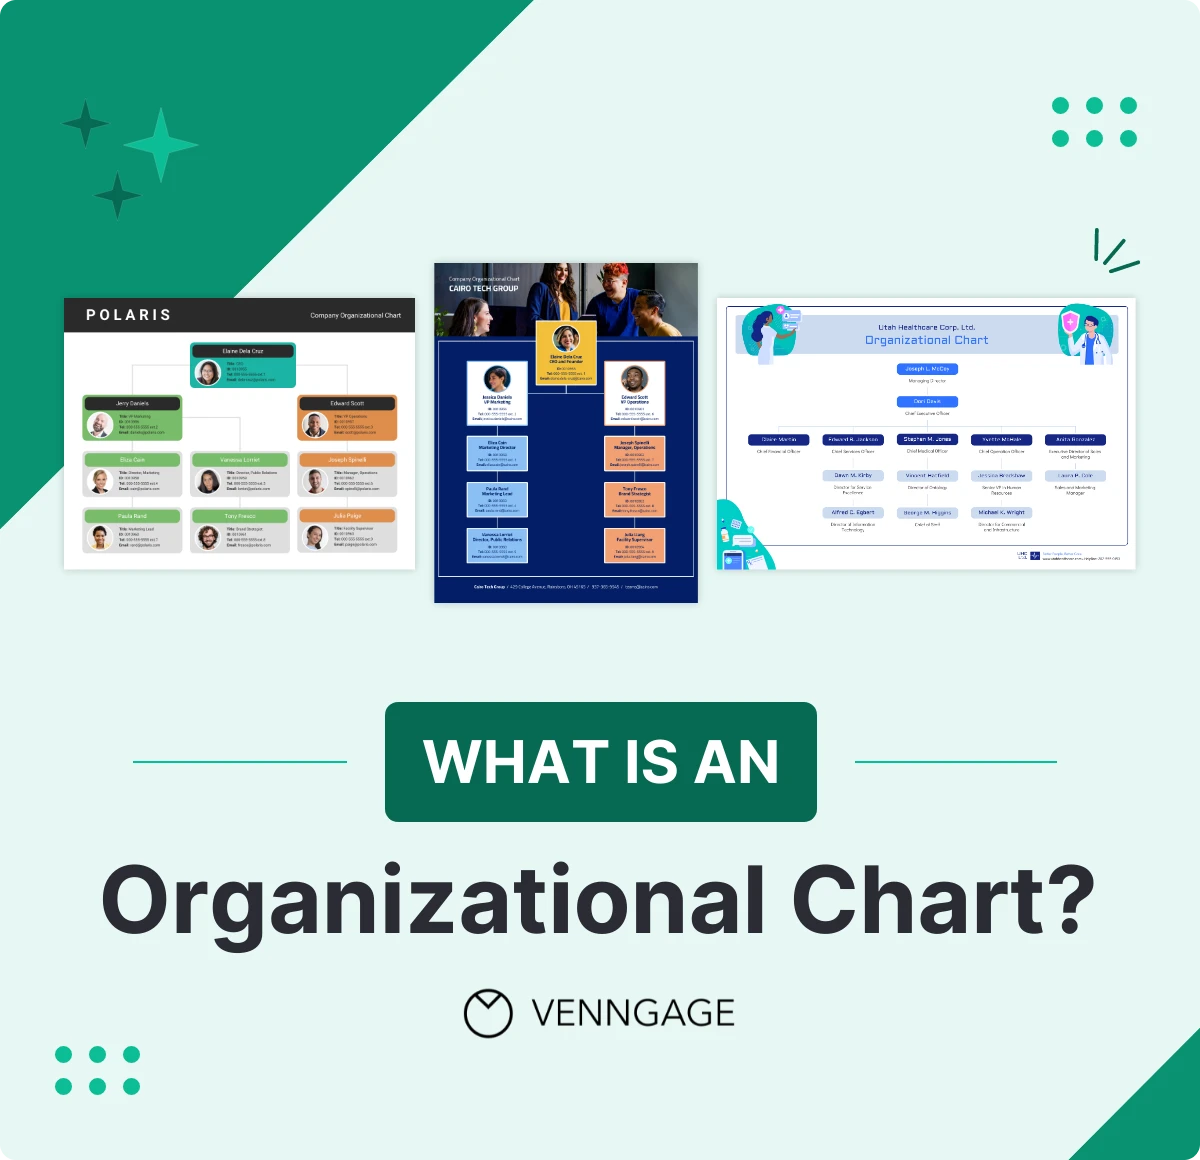 What is an Organizational Chart?
